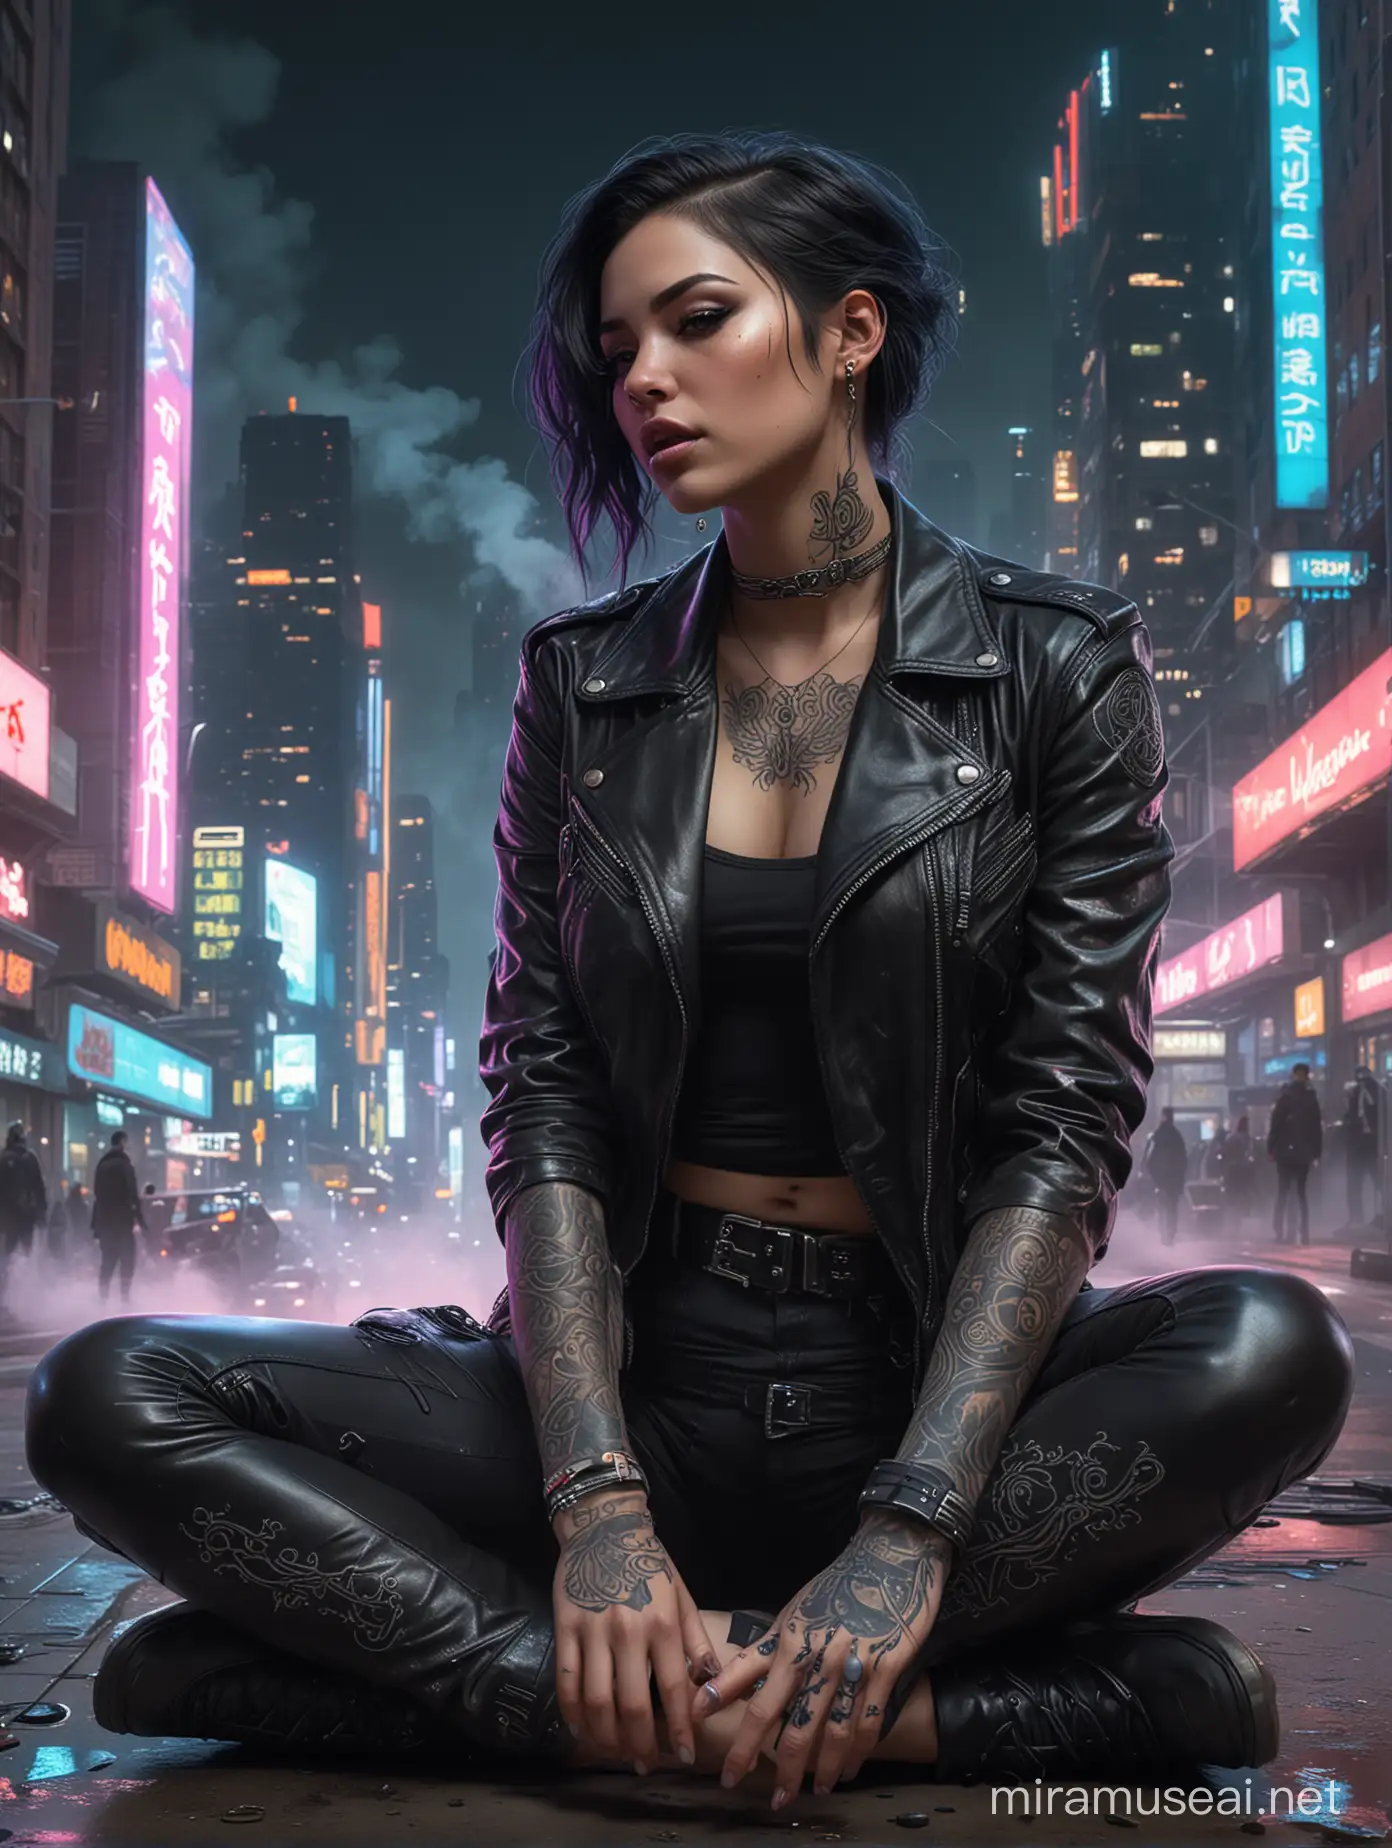 Cyberpunk Gothic Woman Smoking in Neon Cityscape